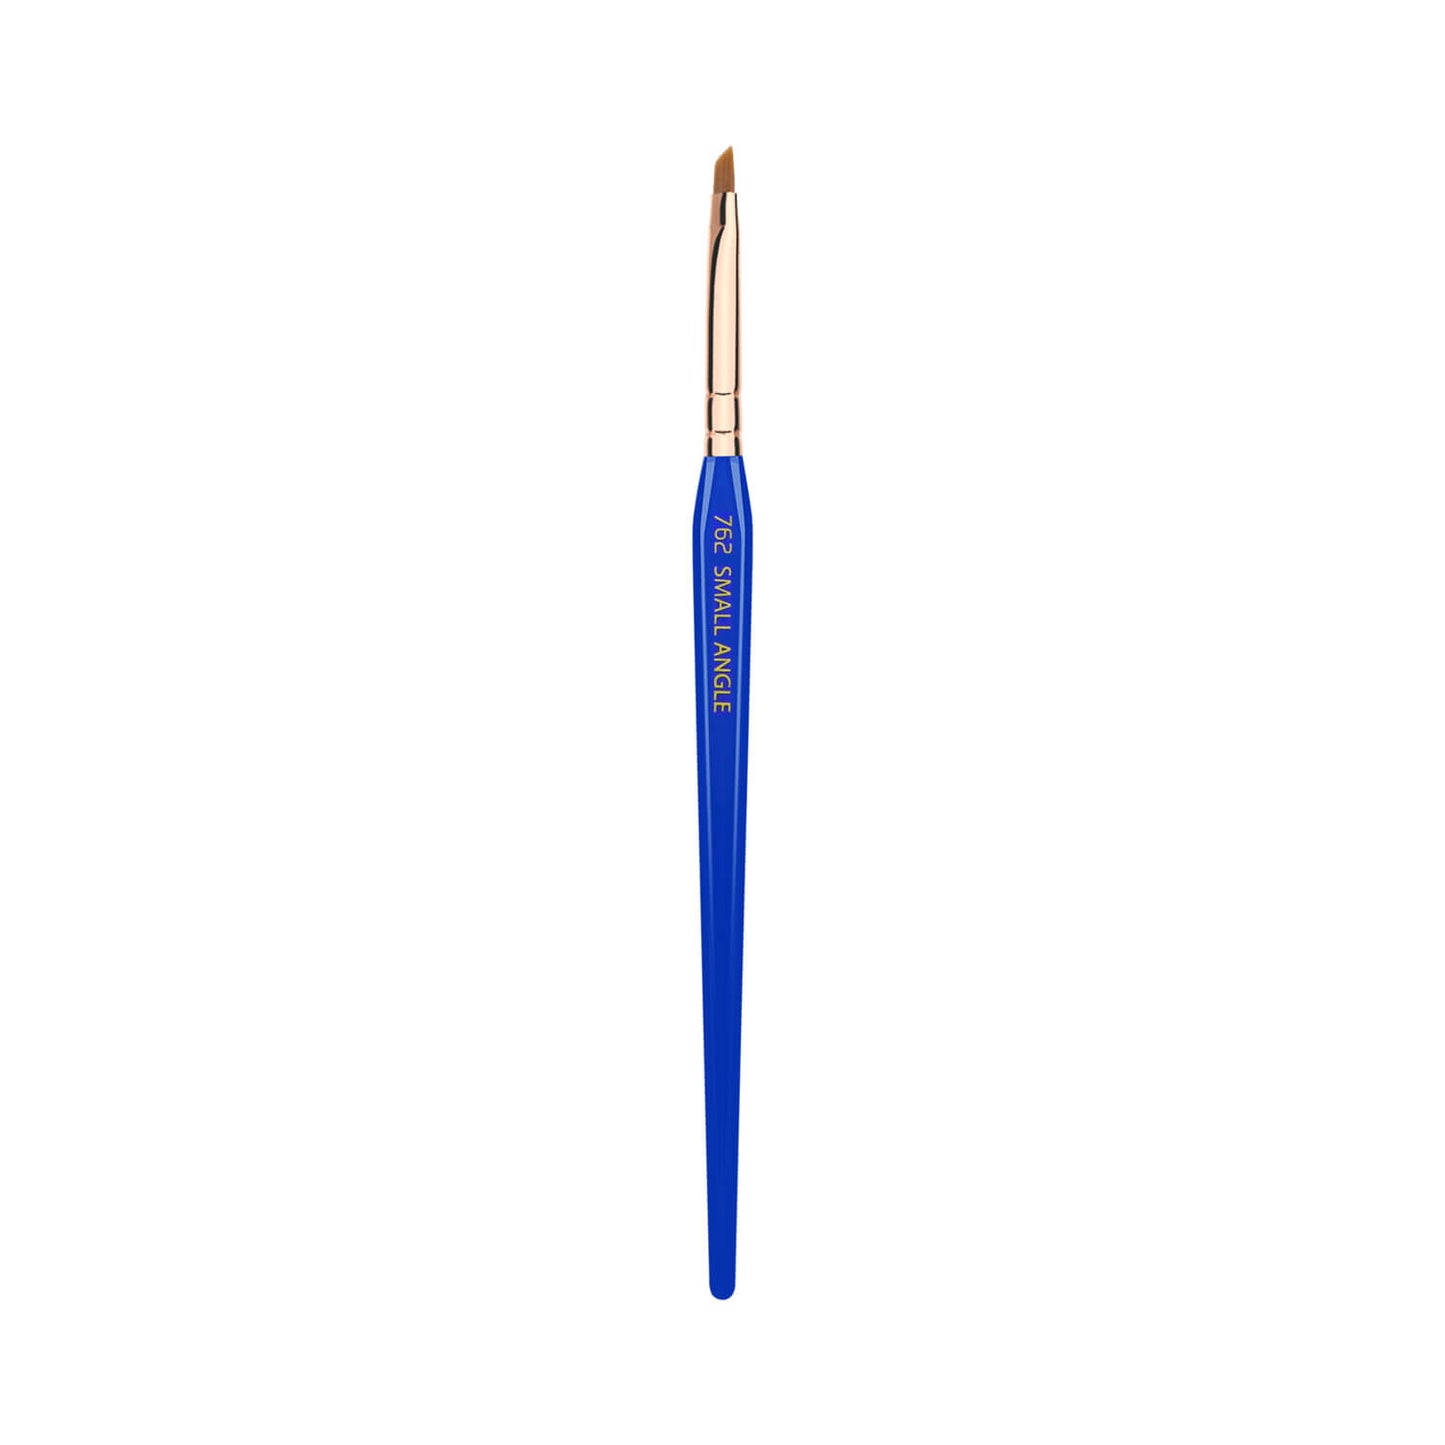 BDellium Tools Golden Triangle 762 Small Angle Brush